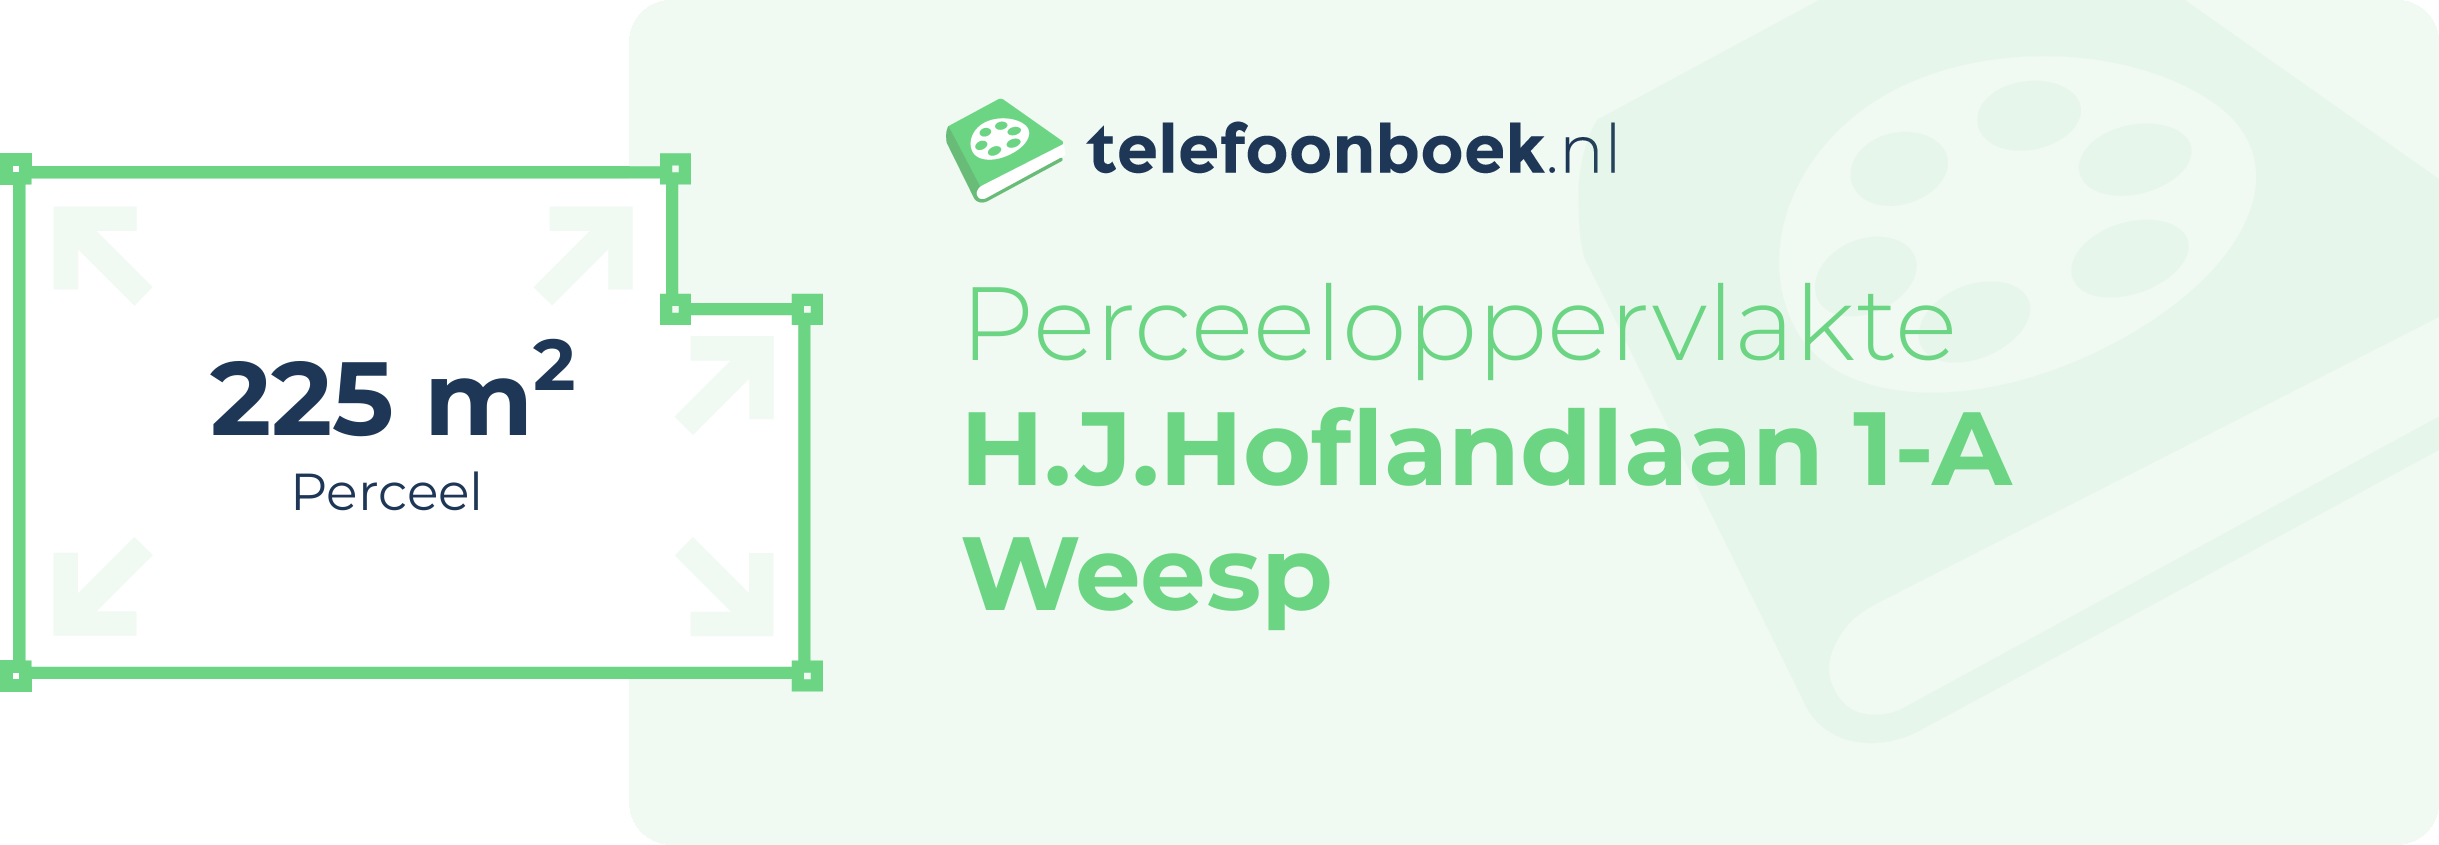 Perceeloppervlakte H.J.Hoflandlaan 1-A Weesp